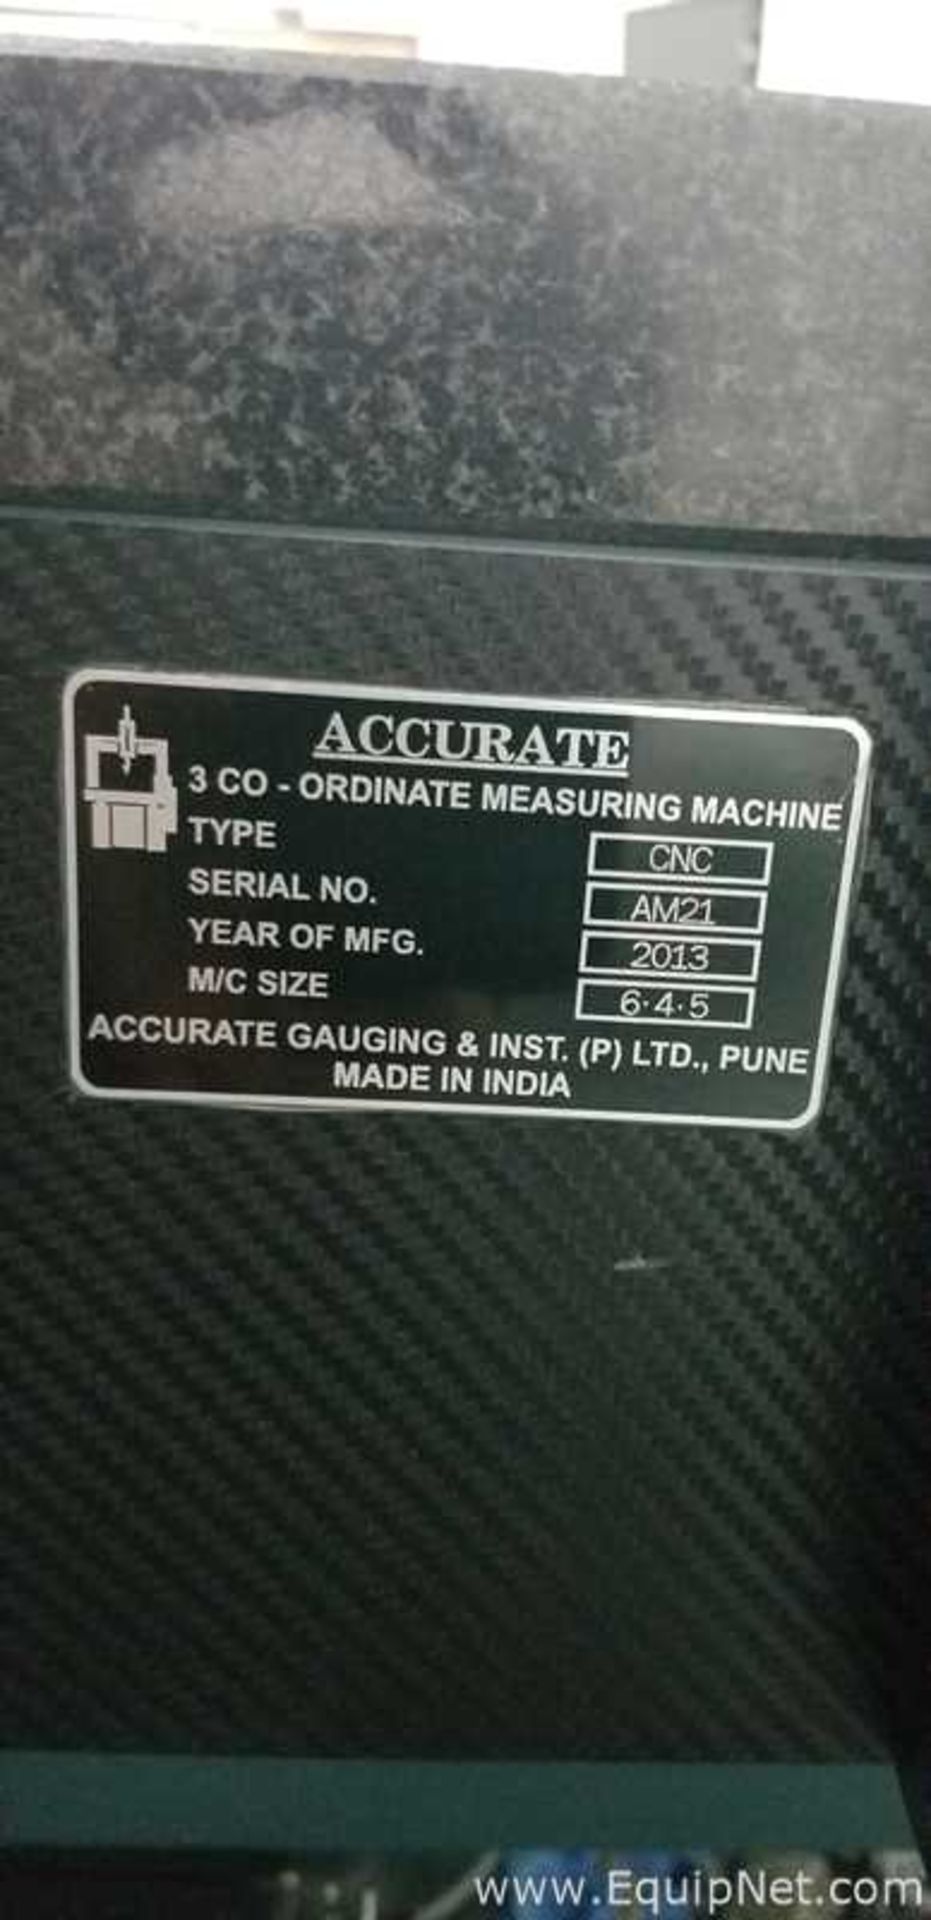 Accurate 6.4.5 Coordinate Measuring Machine Shop Floor - Image 4 of 7